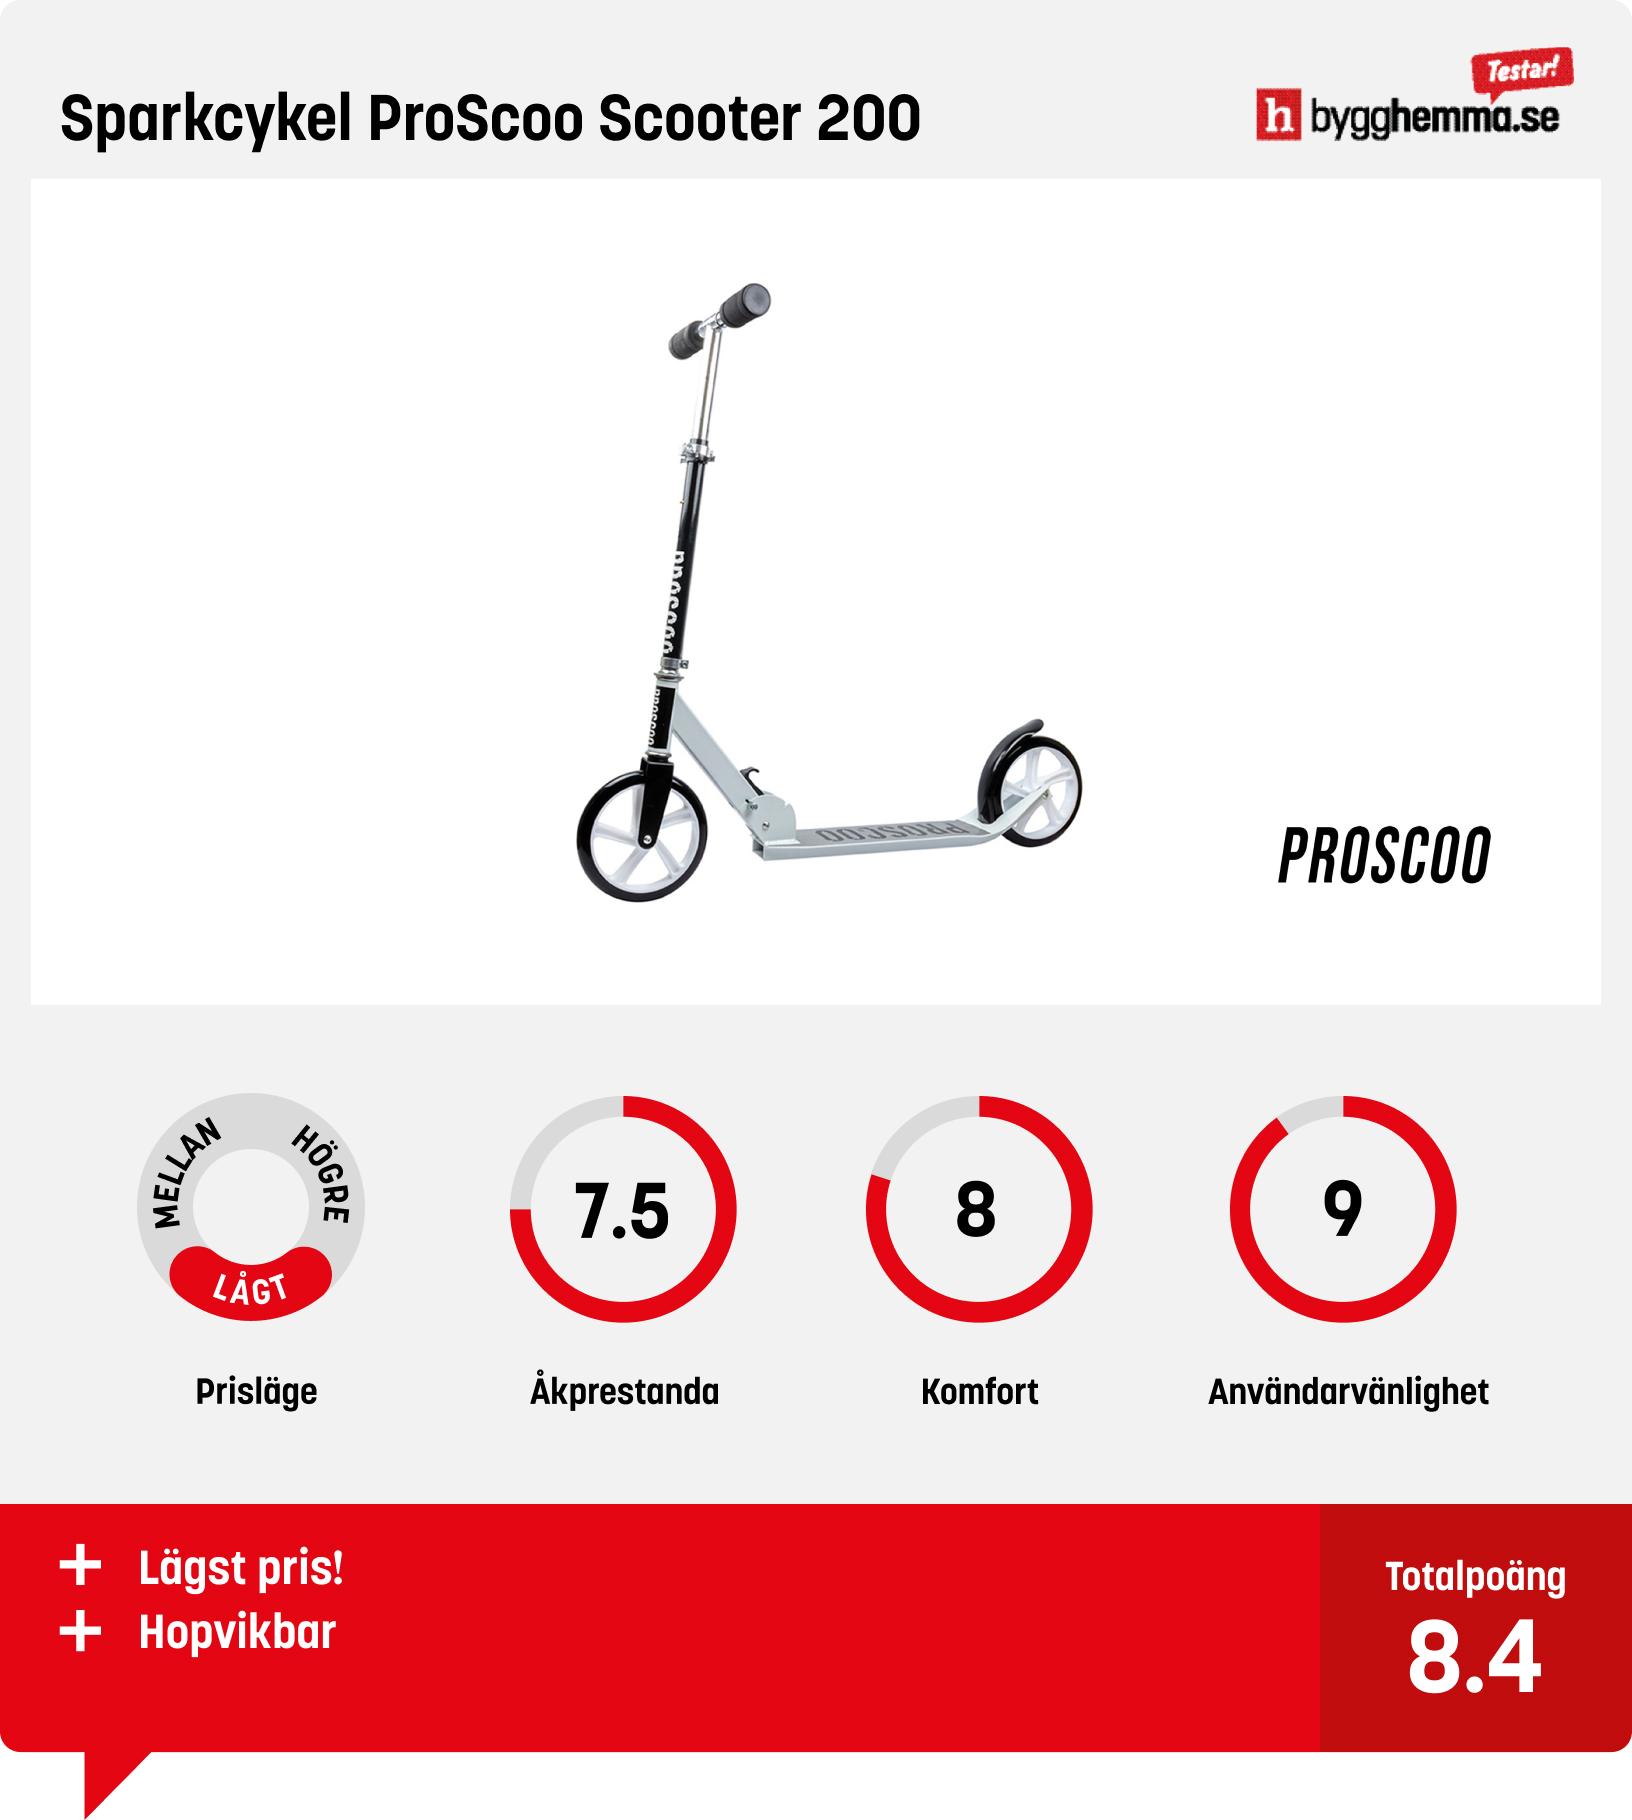 Sparkcykel kickbike barn bäst i test - Sparkcykel ProScoo Scooter 200